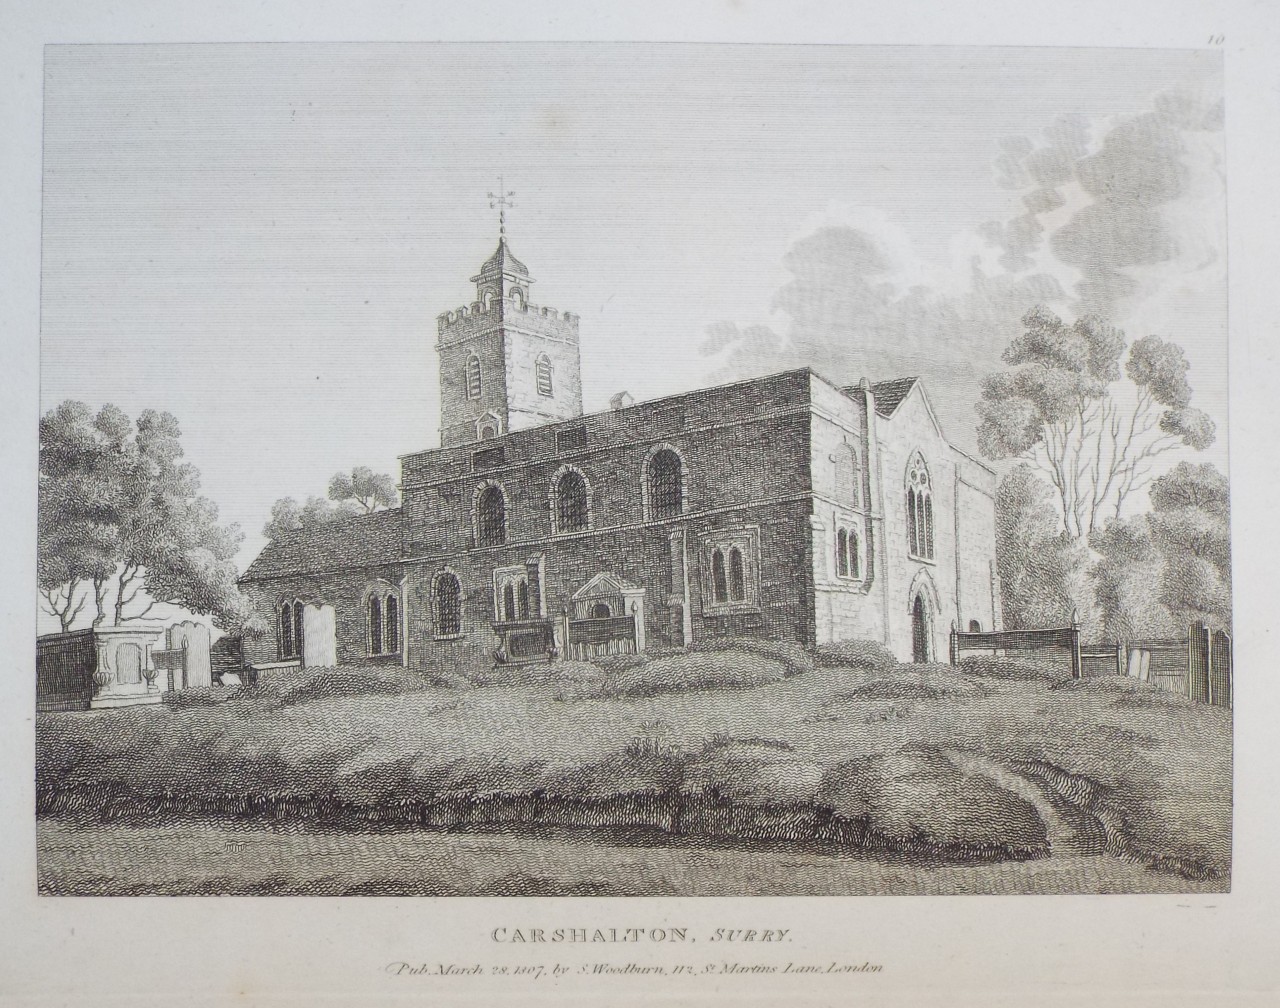 Print - Carshatton, Surry.